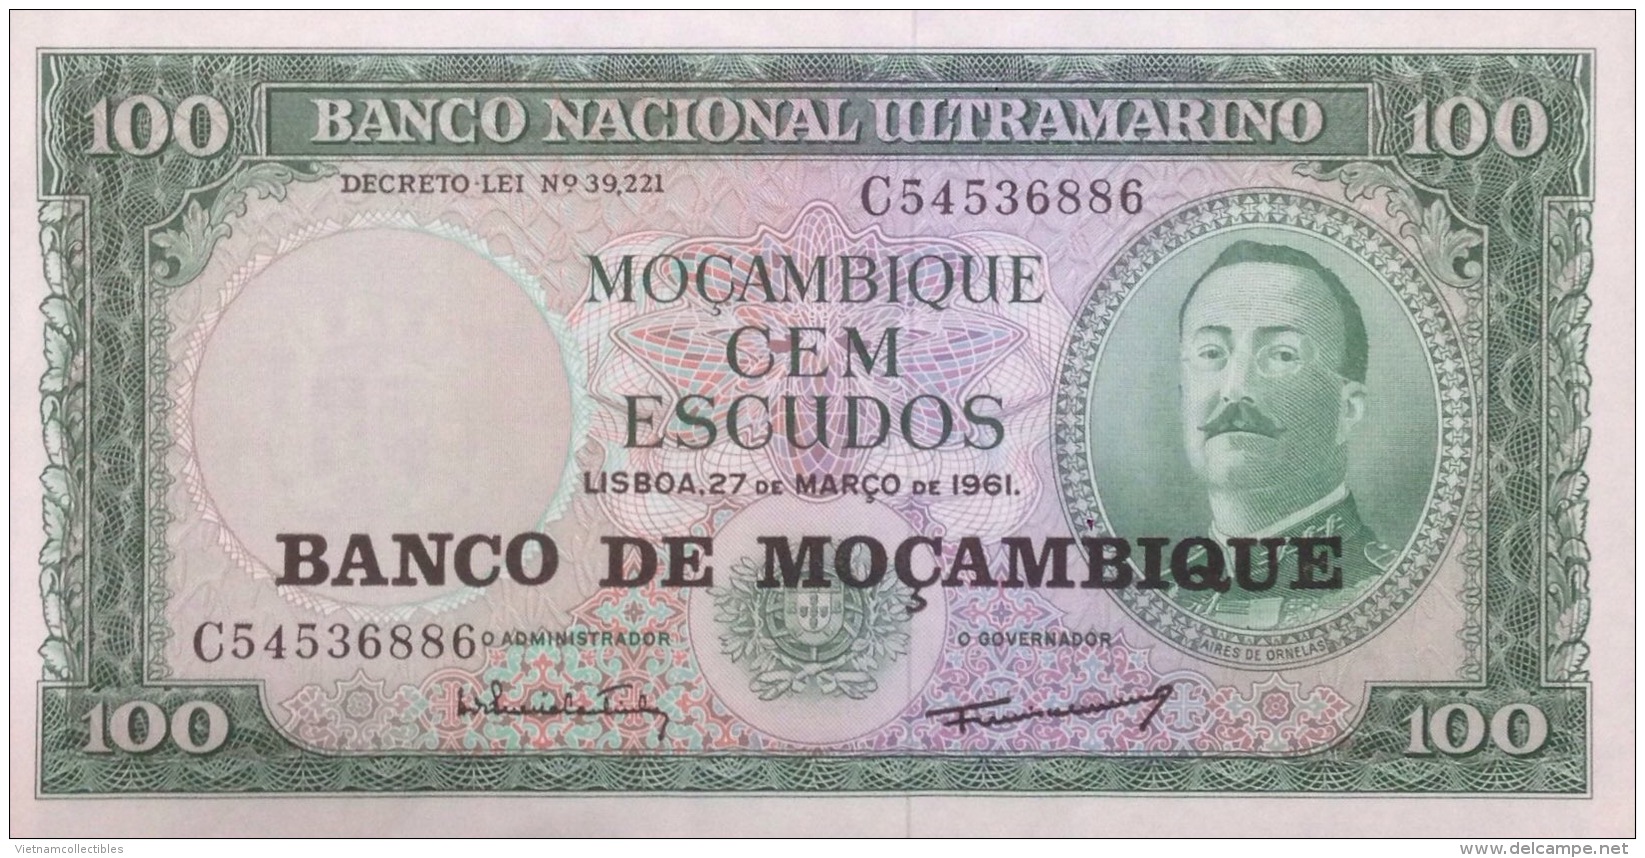 Mozambique UNC 100 Escudos Banknote 1961 (1976) - P-117 - Mozambique